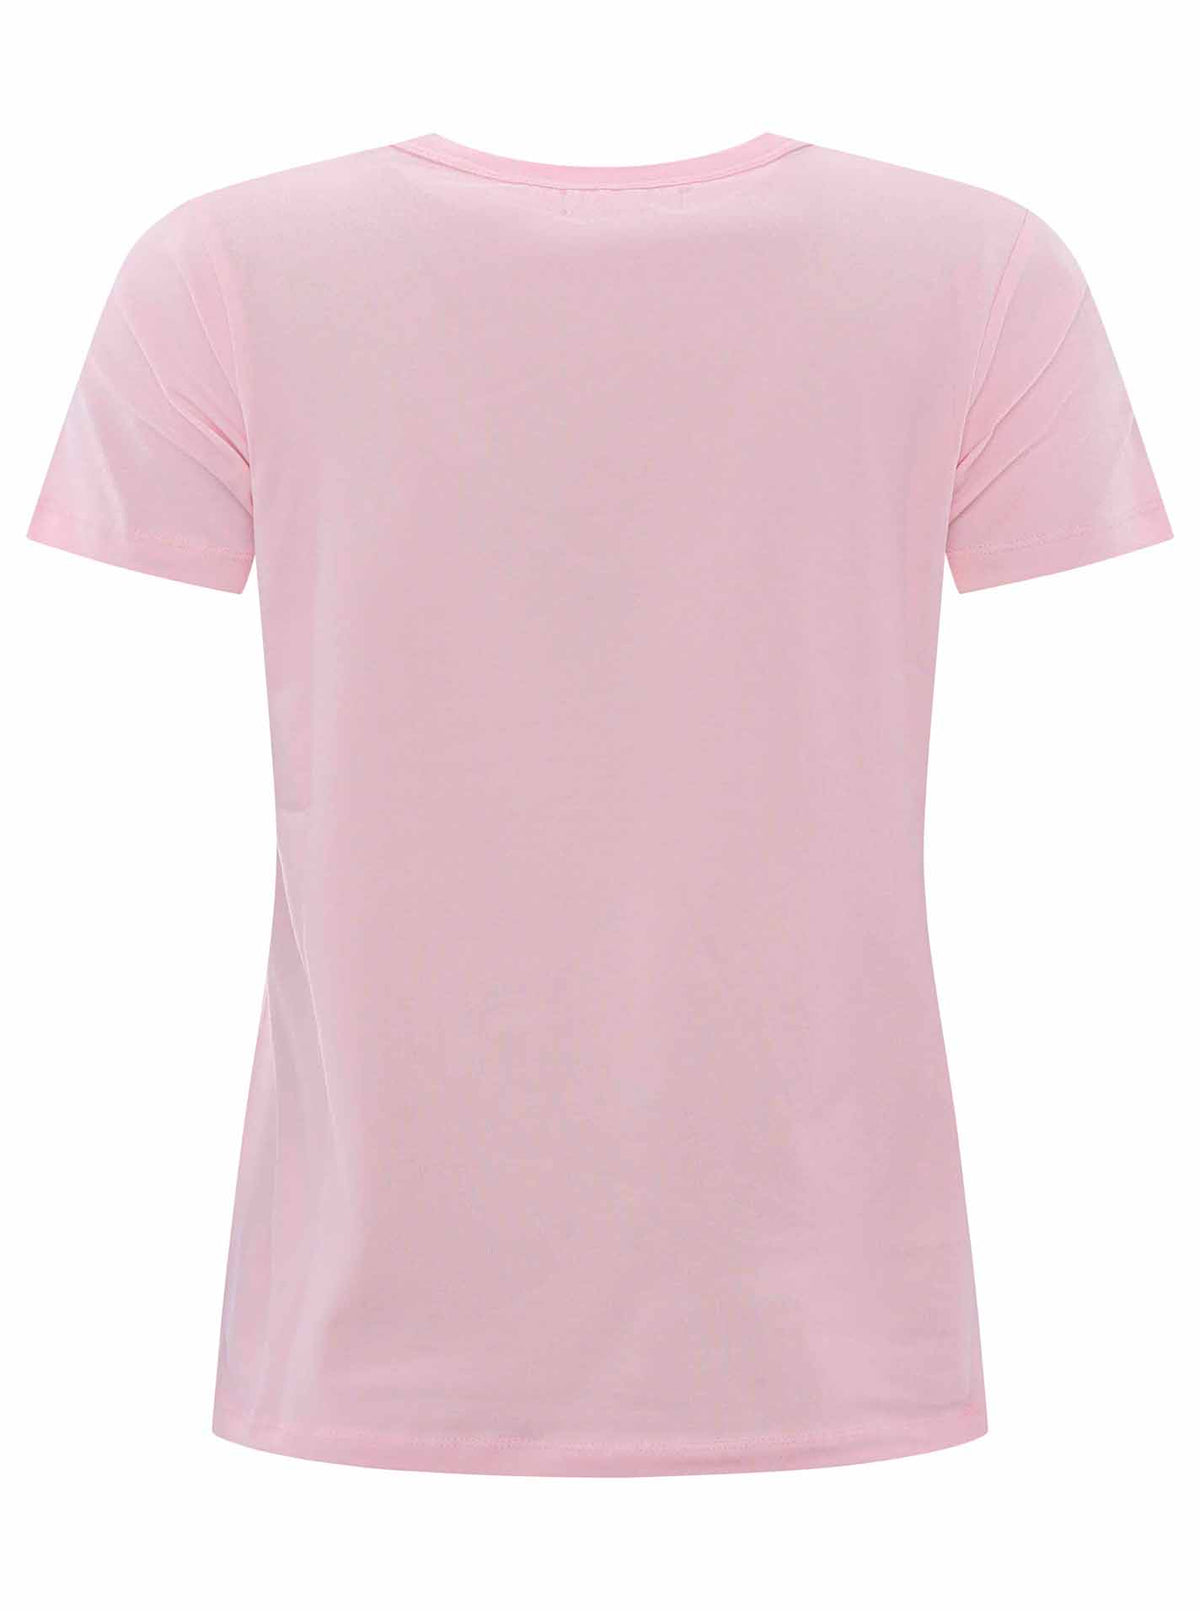 Zwillingsherz - Moin T-Shirt - Pink